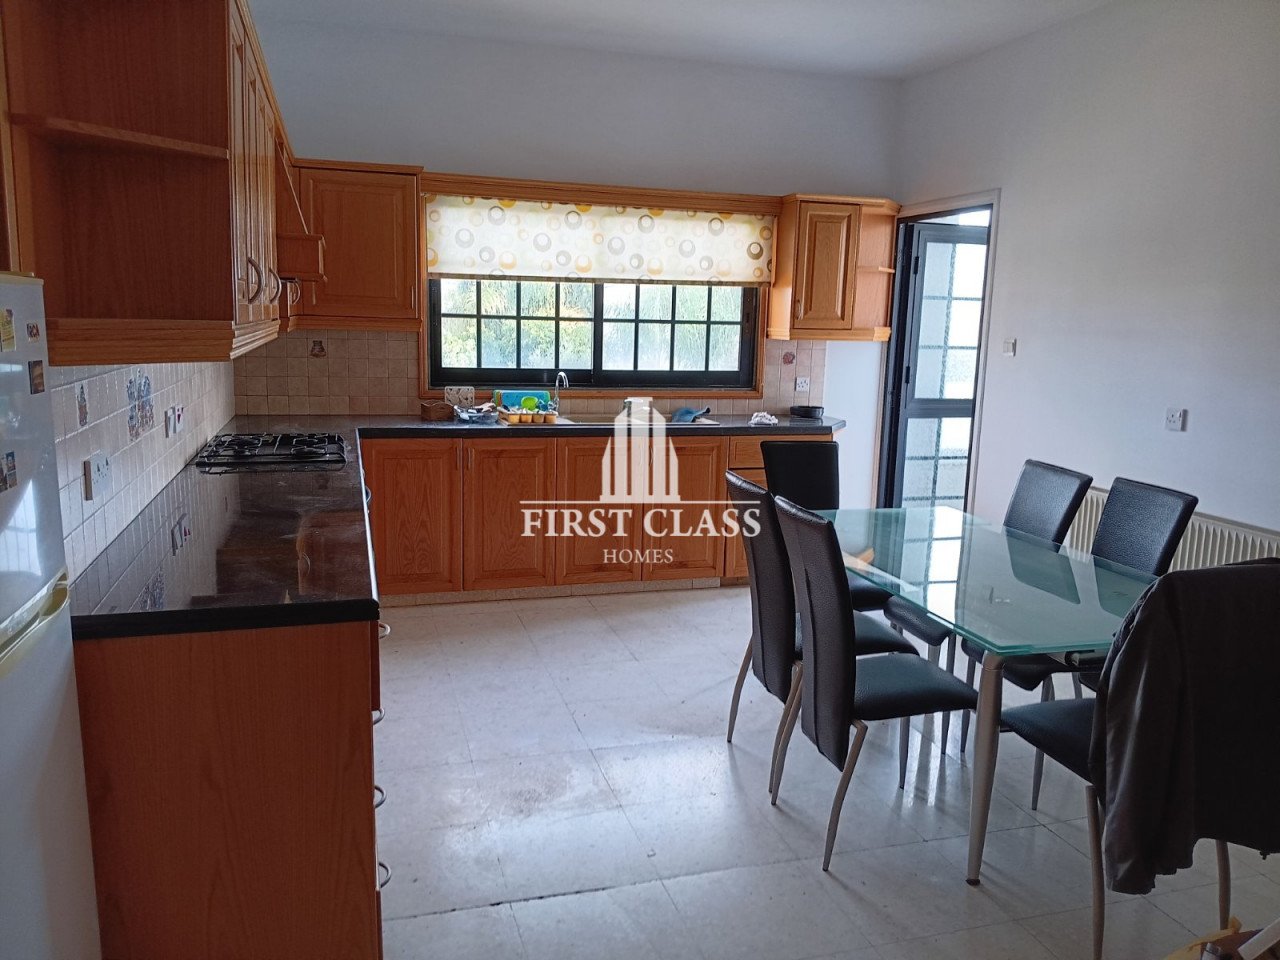 Property for Rent: Apartment (Flat) in Lakatamia, Nicosia for Rent | Key Realtor Cyprus